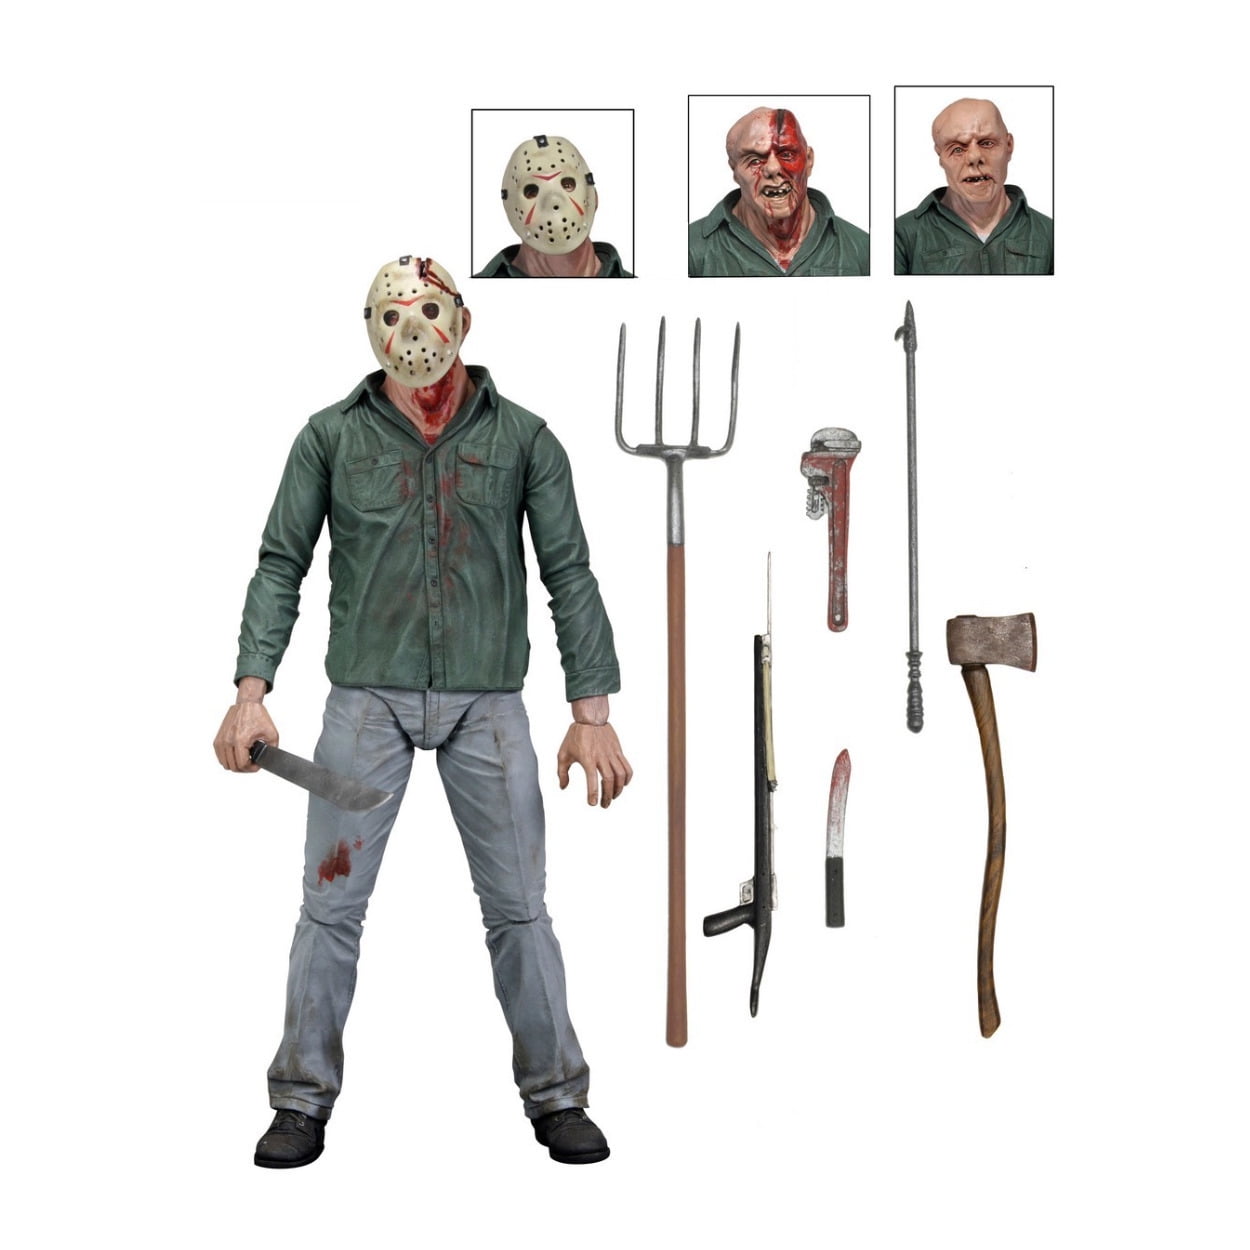 NEW BOXED NECA Horror Freddy VS Jason Action Figure 7" Jason Voorhees Deluxe 